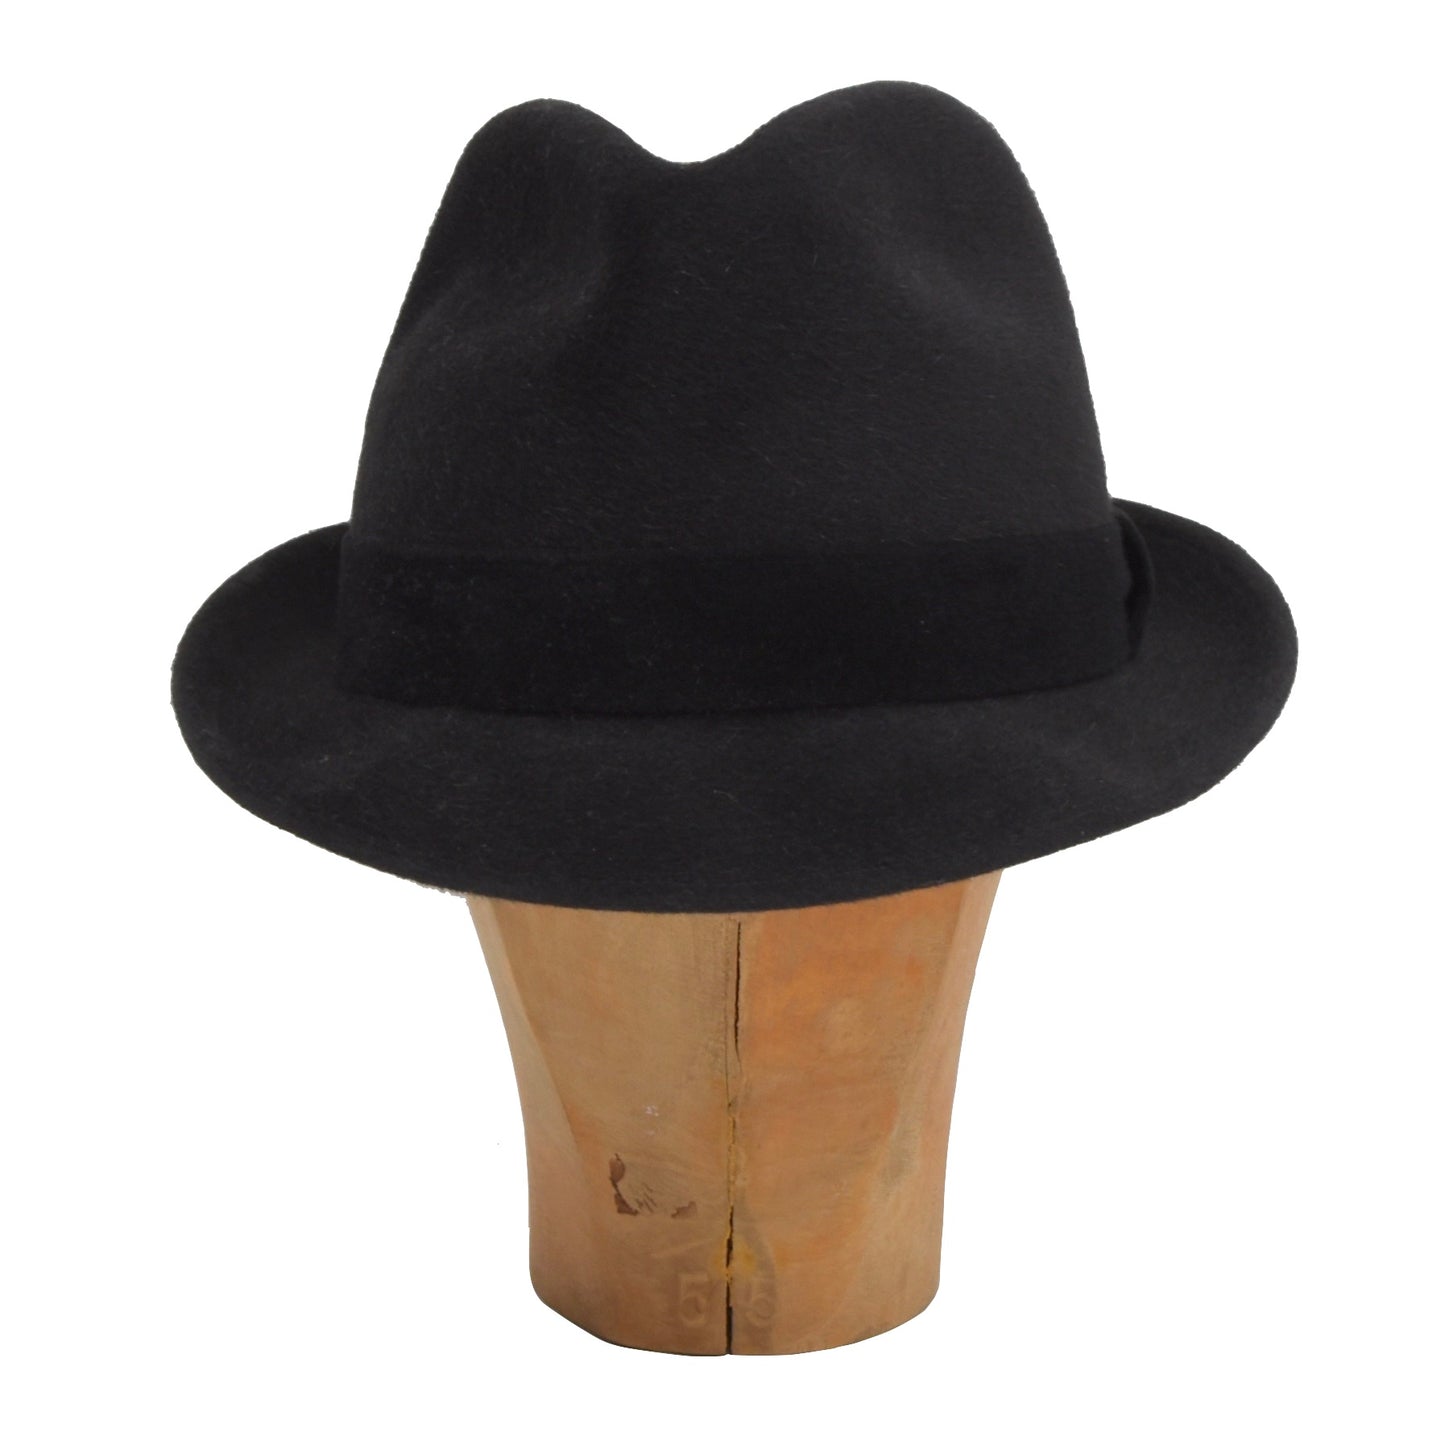 Mayser Fur Felt Hat Size 58 - Charcoal